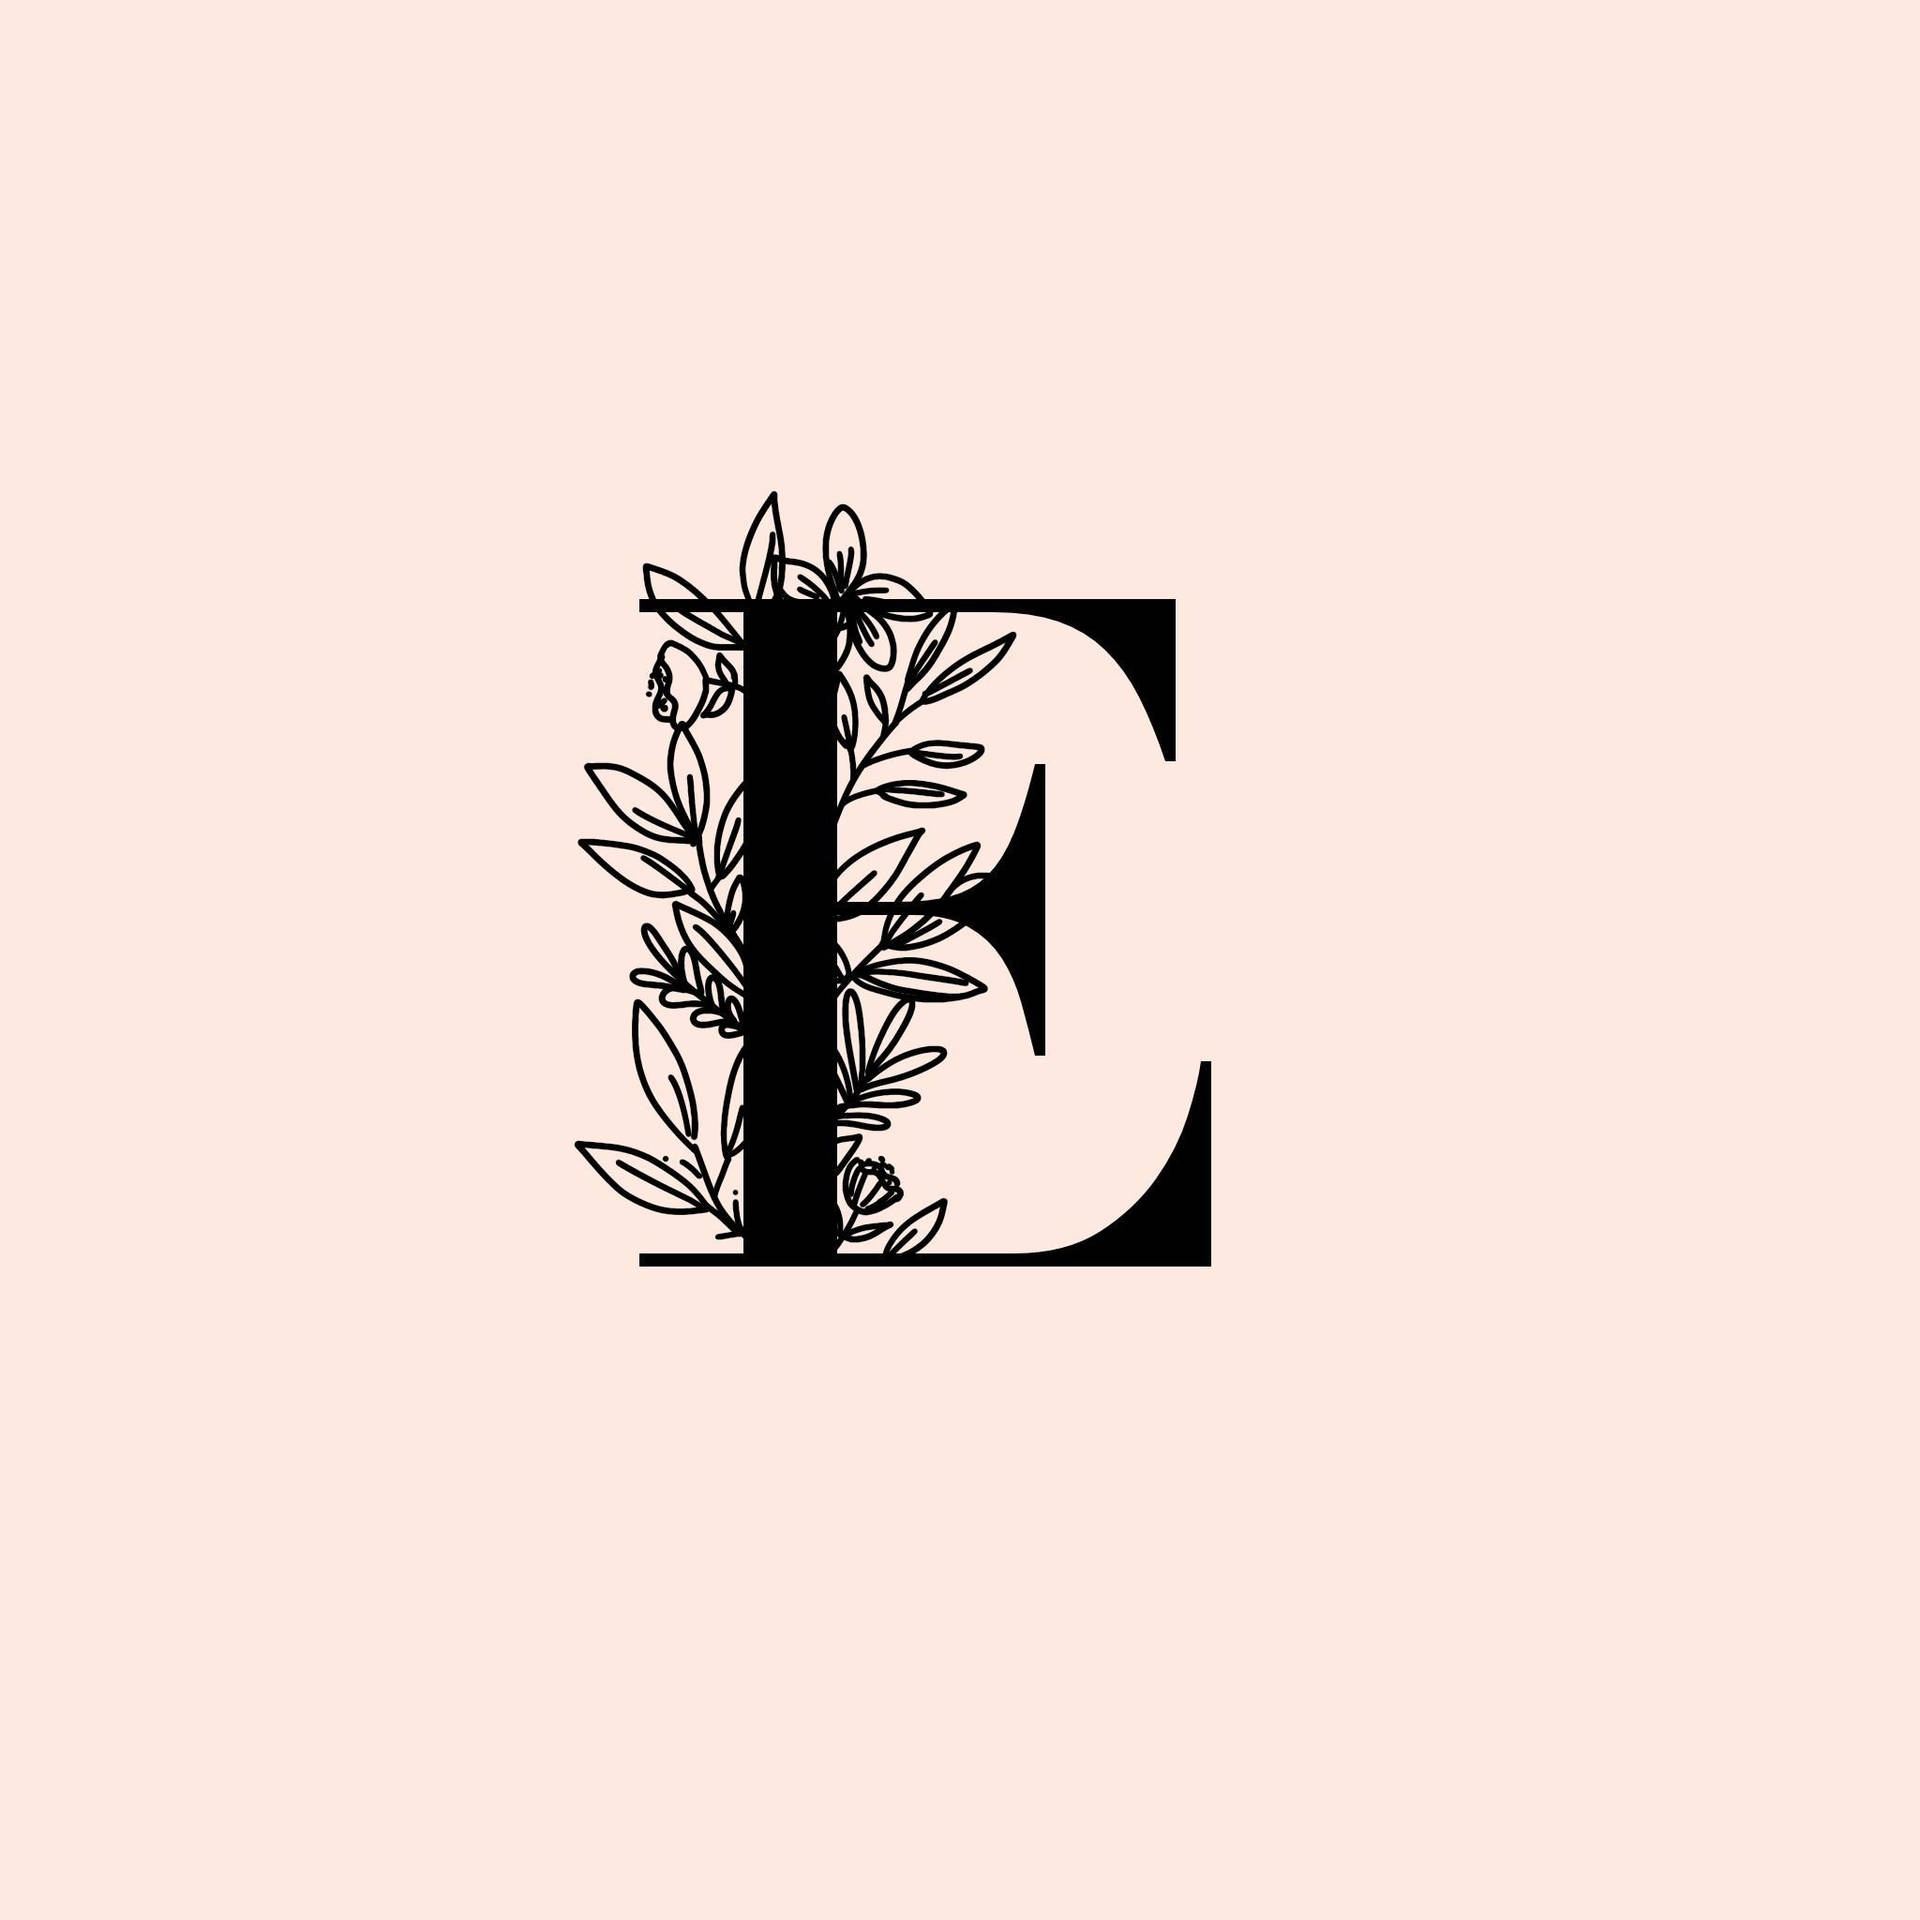 Free Letter E Wallpaper Downloads, [100+] Letter E Wallpapers for FREE |  